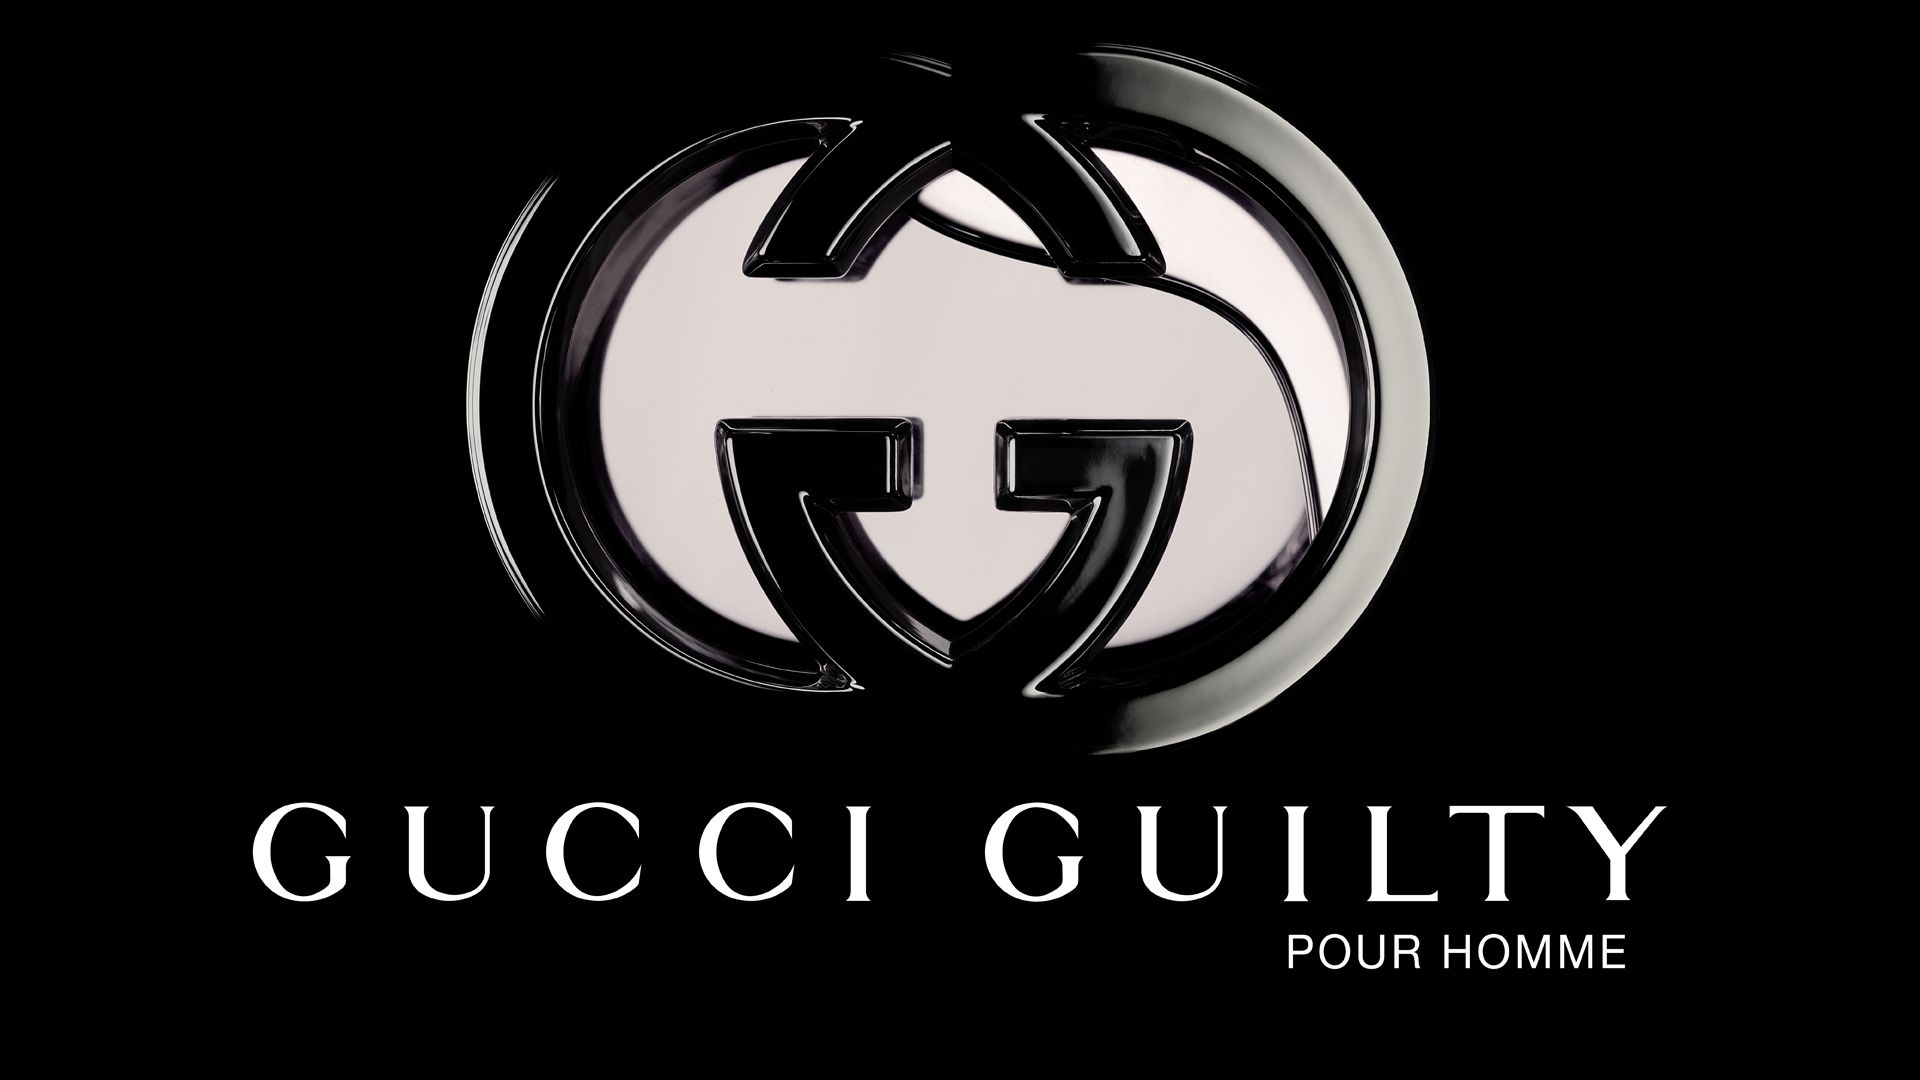 Download Gucci Wallpapers, Gucci Wallpapers, Gucci Wallpapers